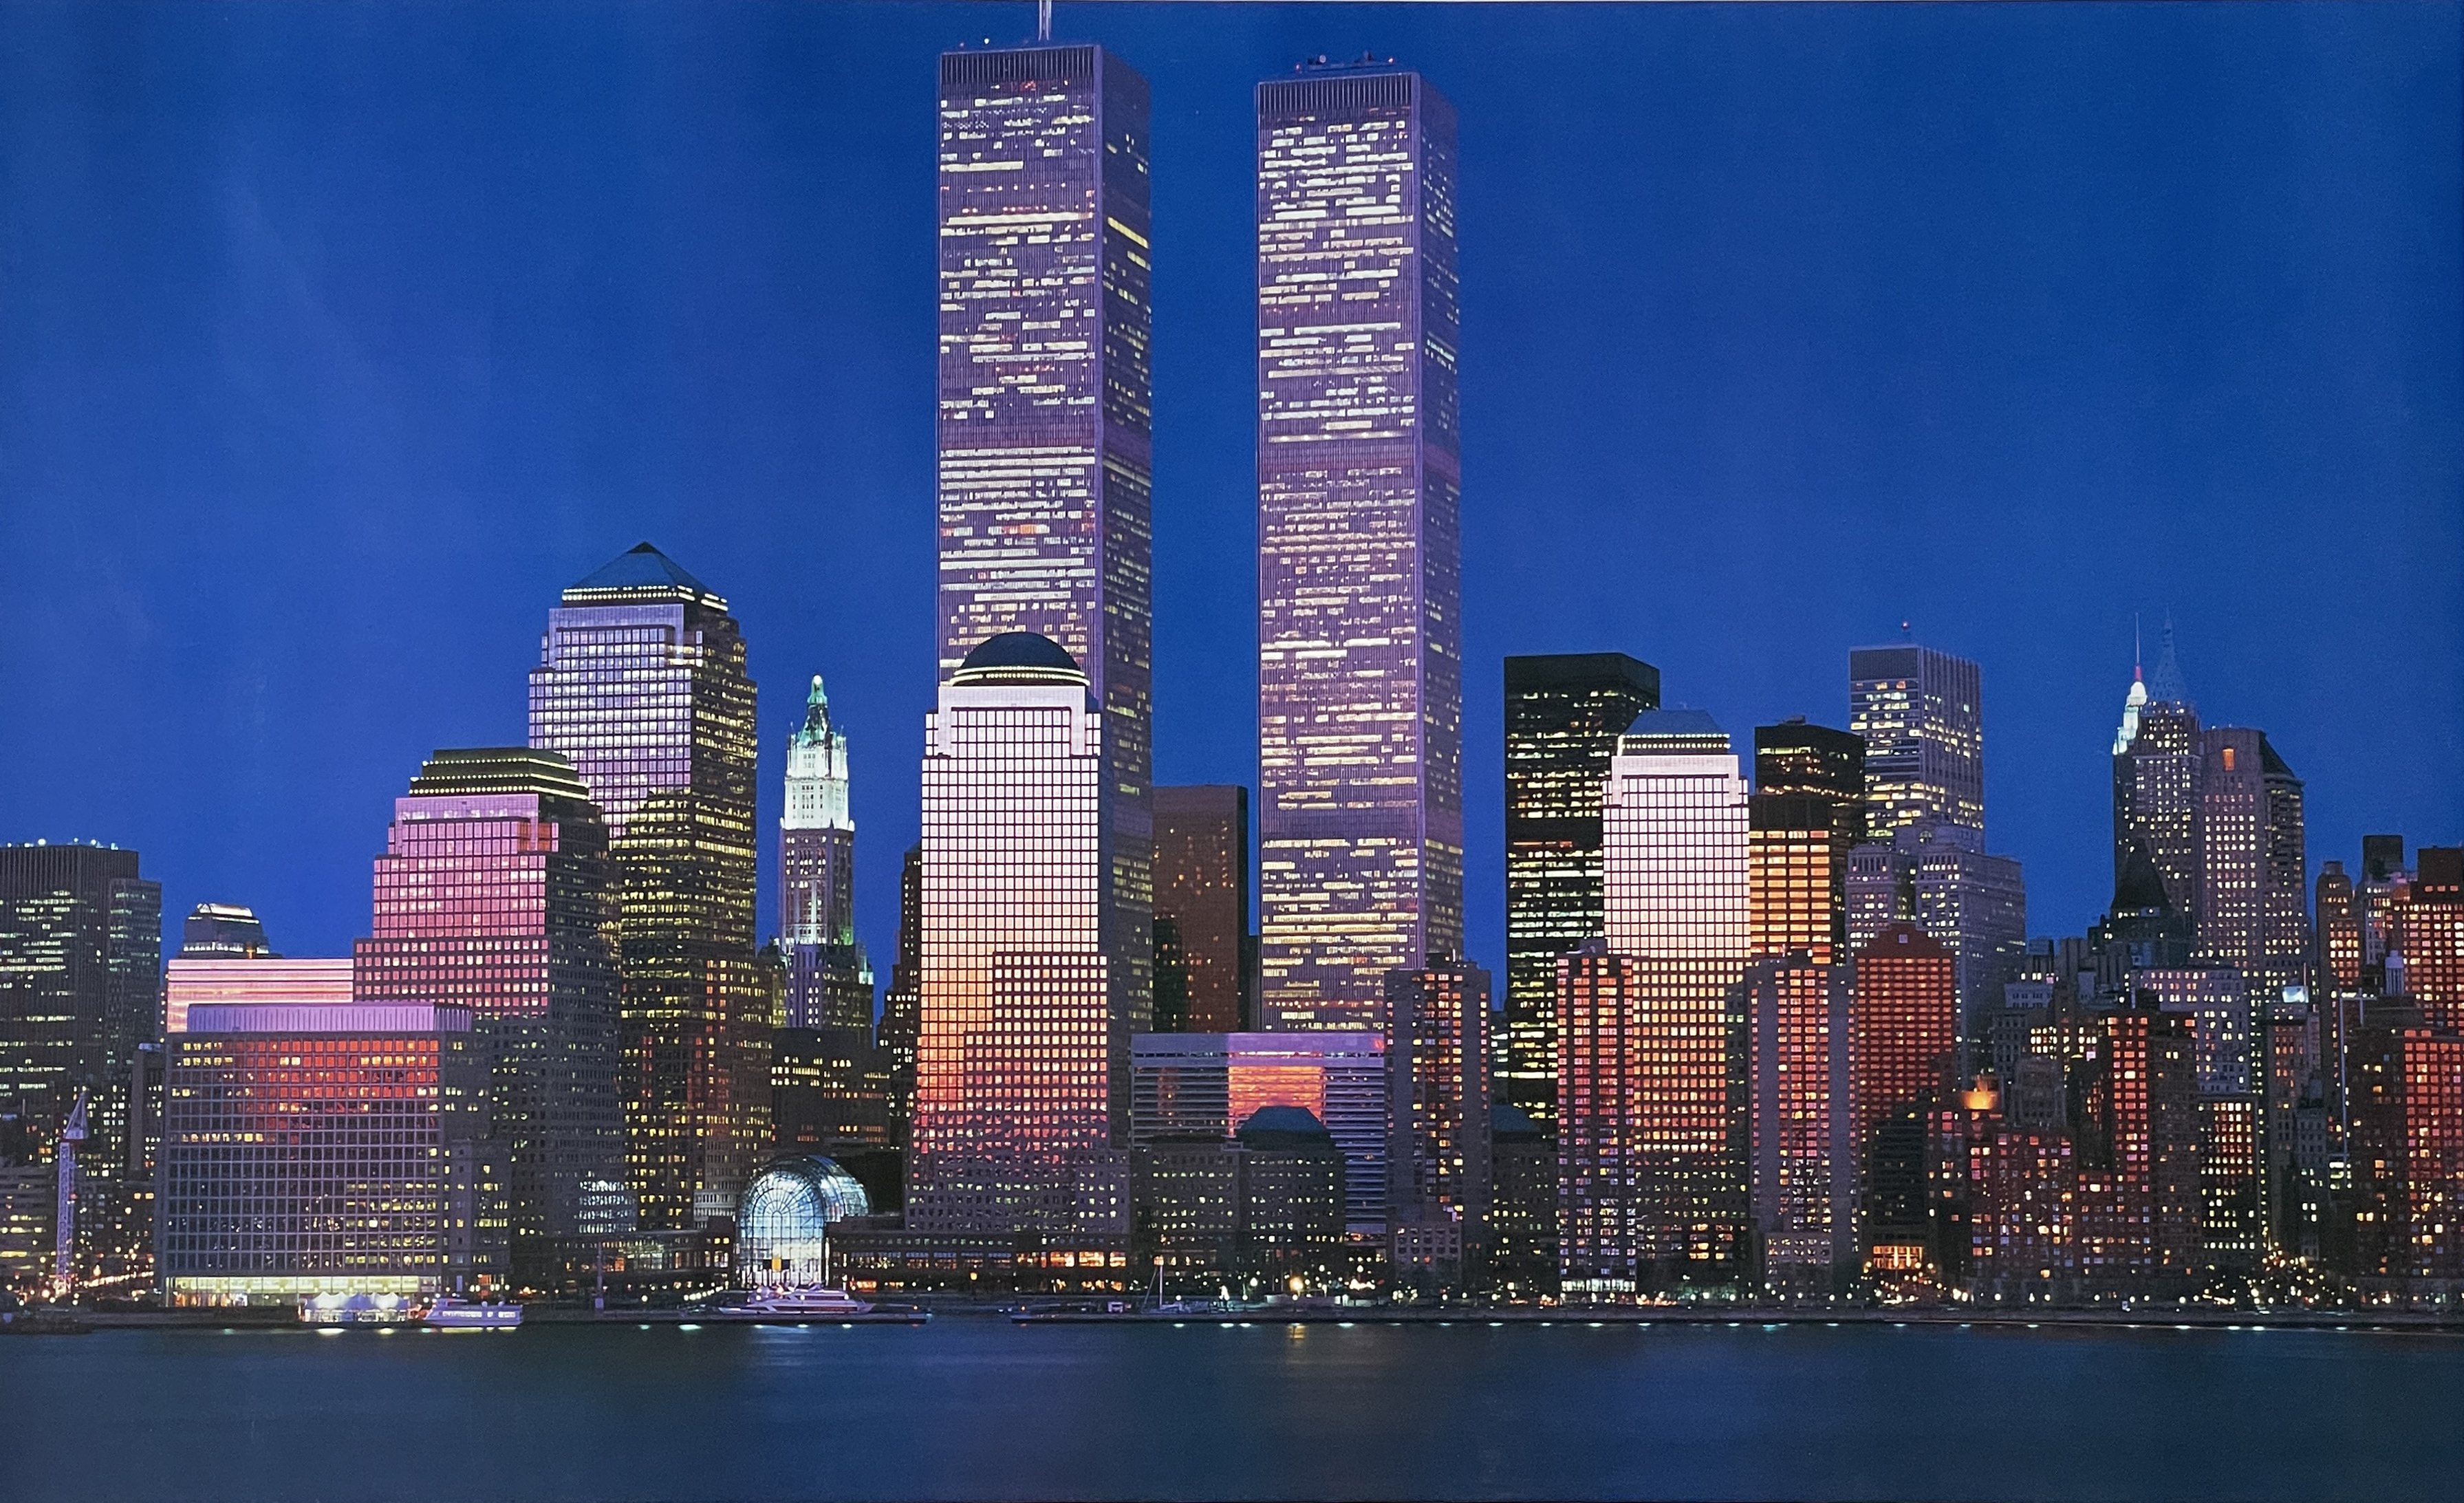 World Trade Center 1973-2001